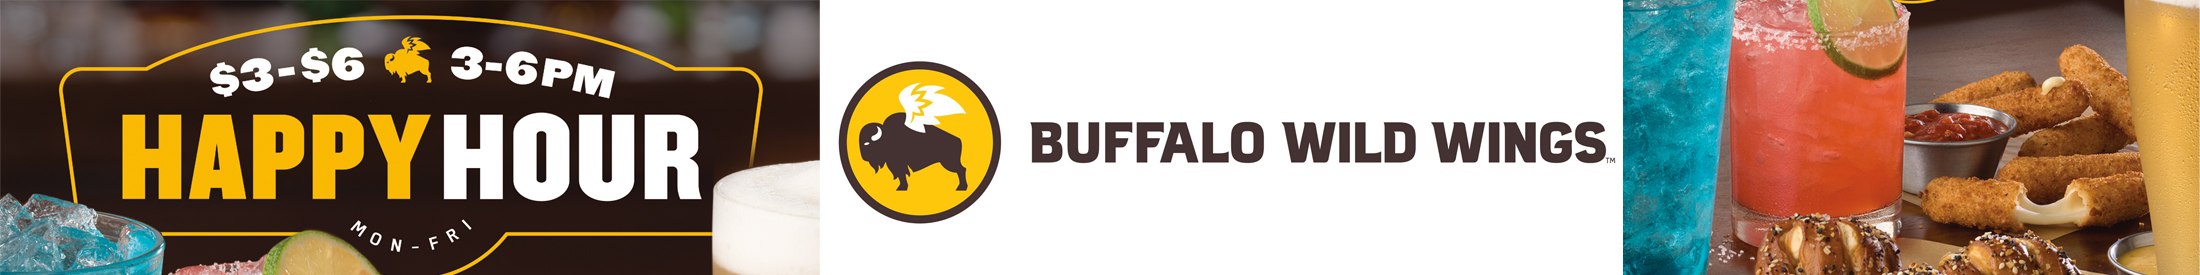 Image of Buffalo Wild Wings Advertisement